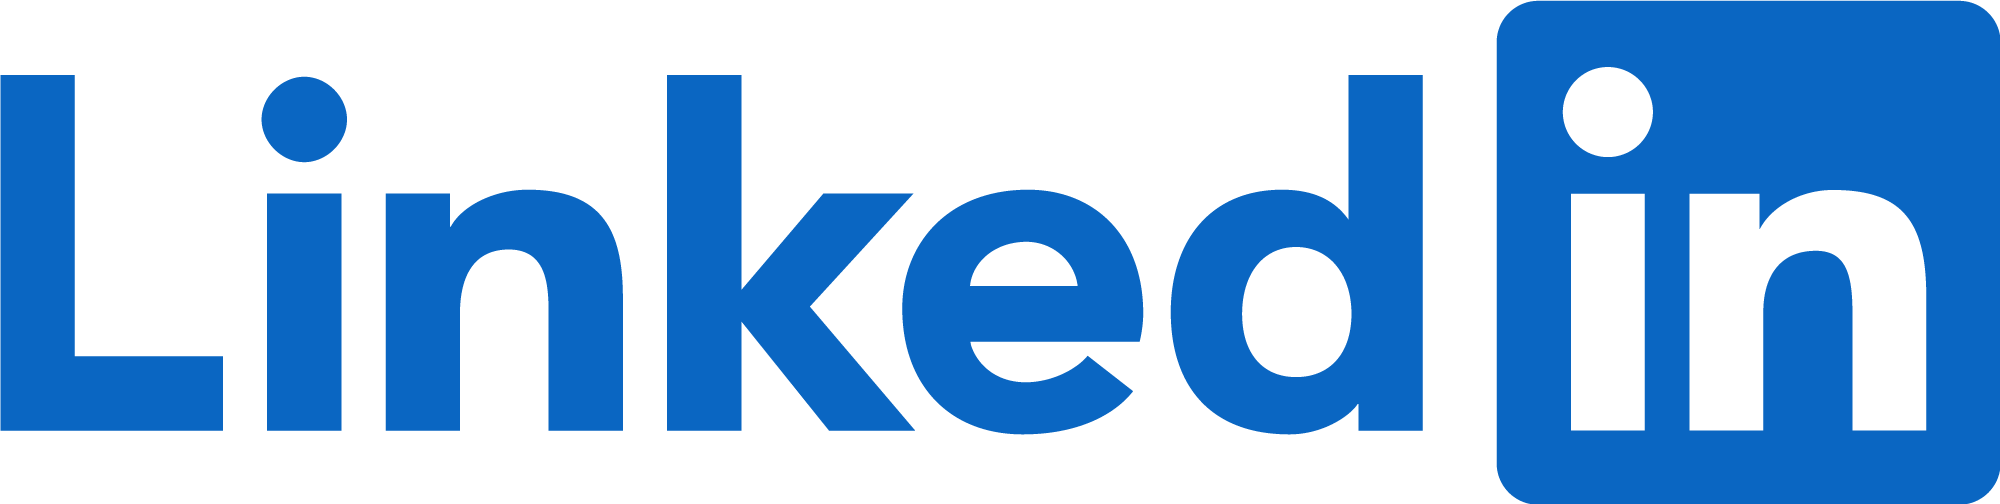 CREtech logo